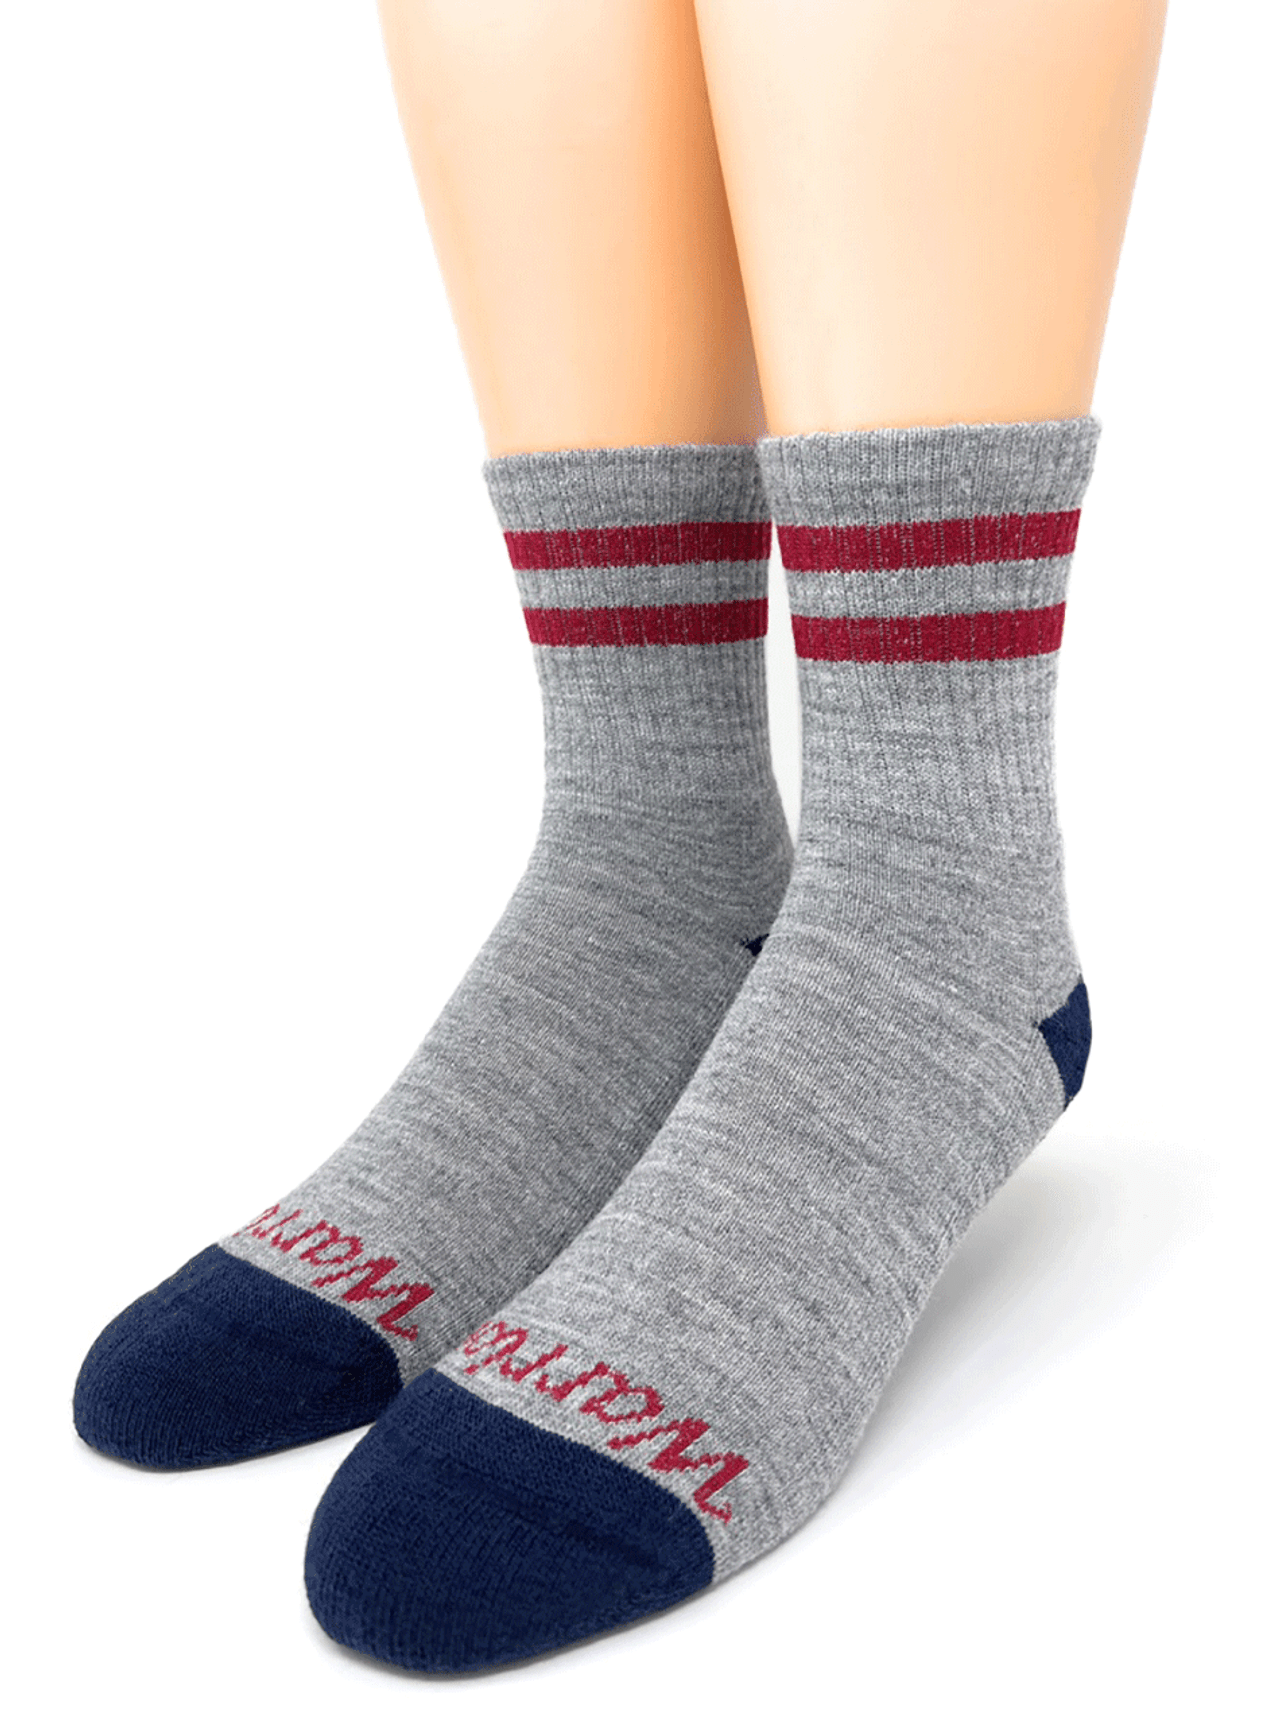 Alpaca Socks | Shop 100% Alpaca Wool Socks Online - Warrior Alpaca Socks